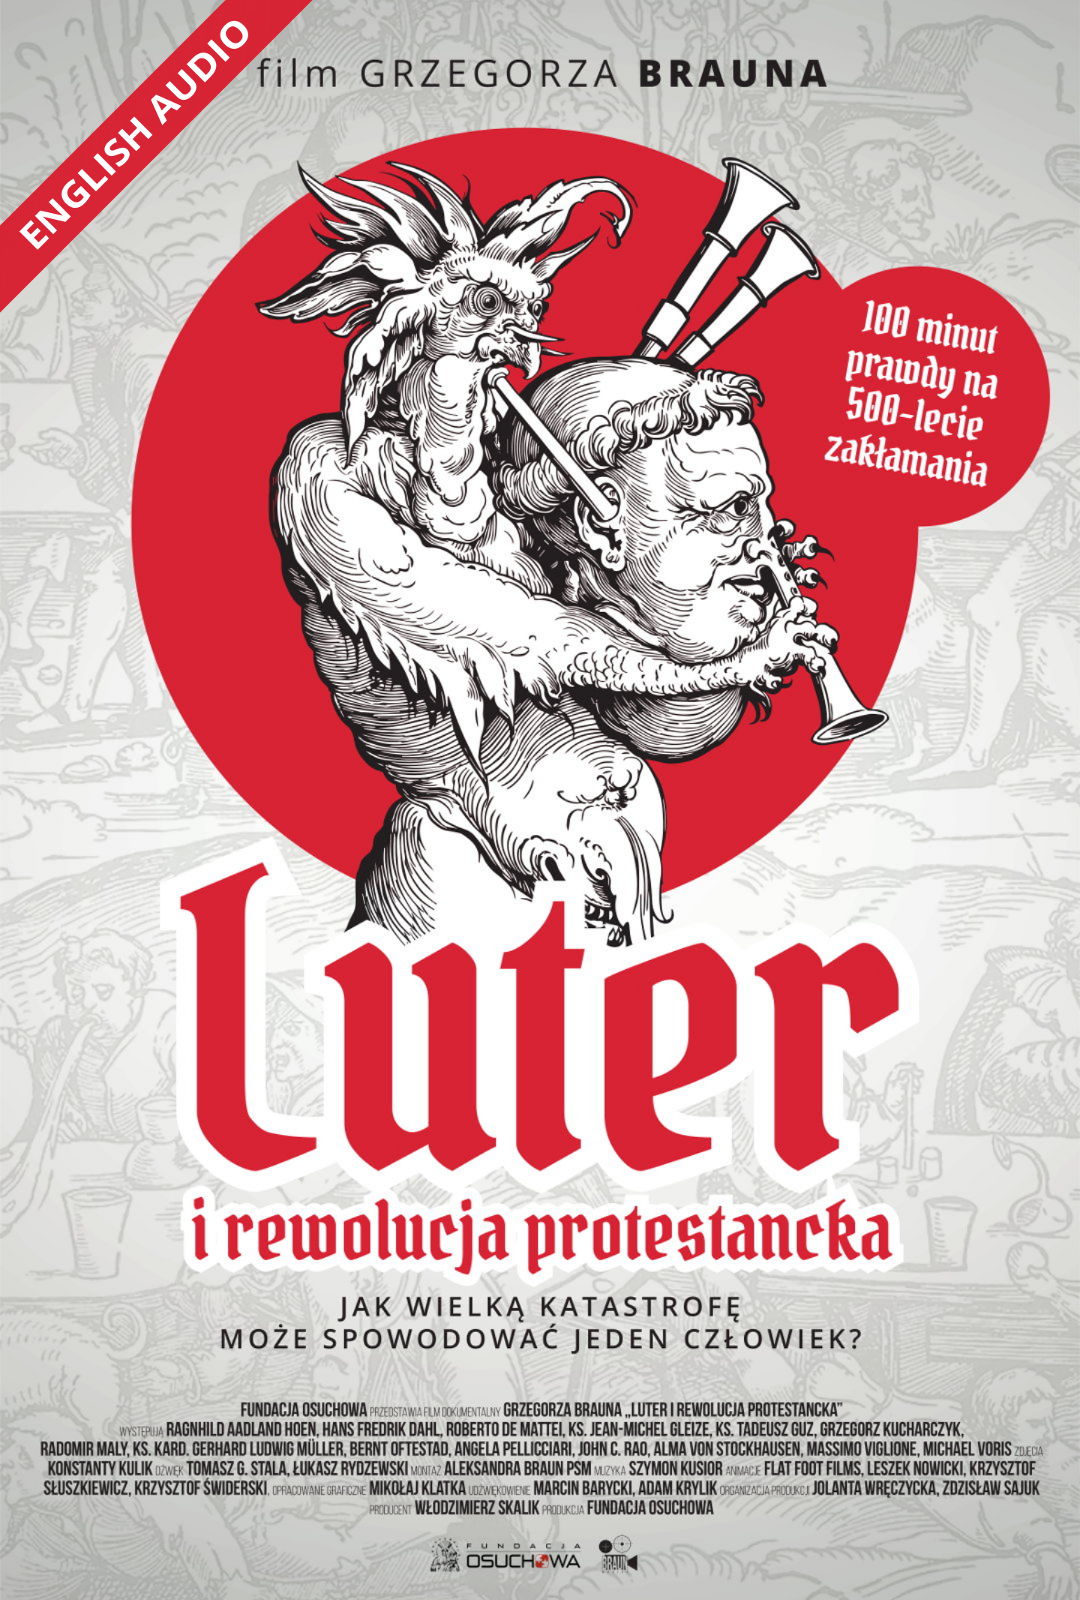 Luter i rewolucja protestancka - lektor angielski